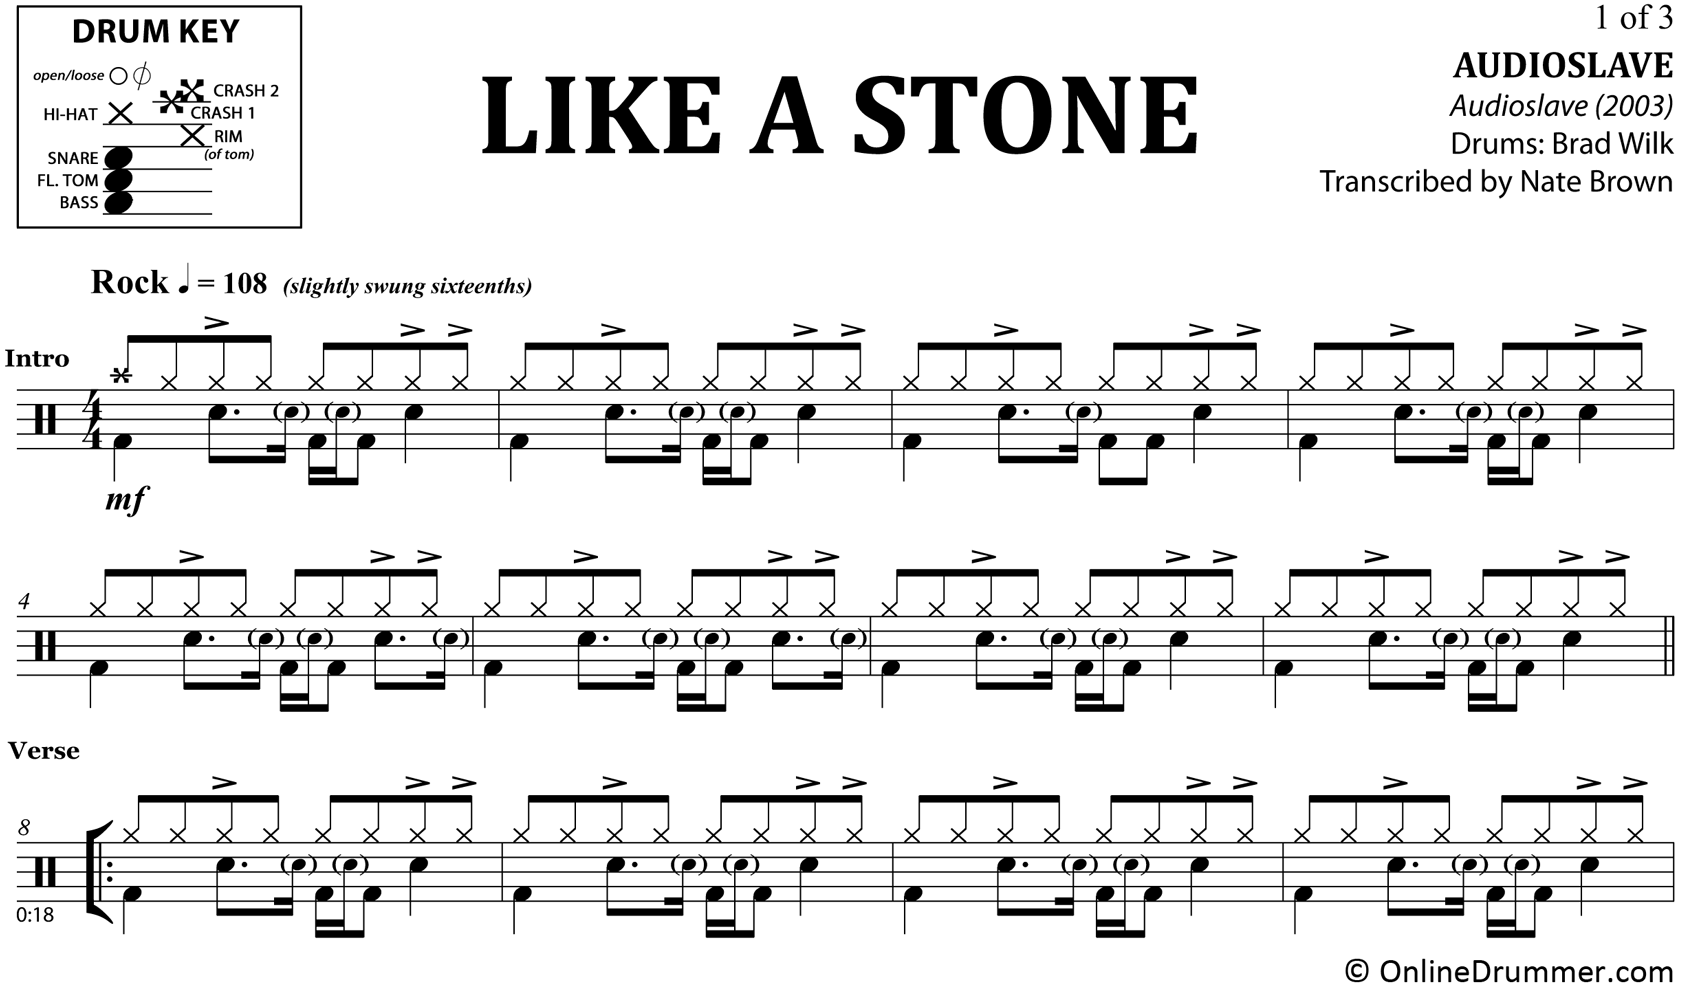 Like A Stone - Audioslave - Drum Sheet Music